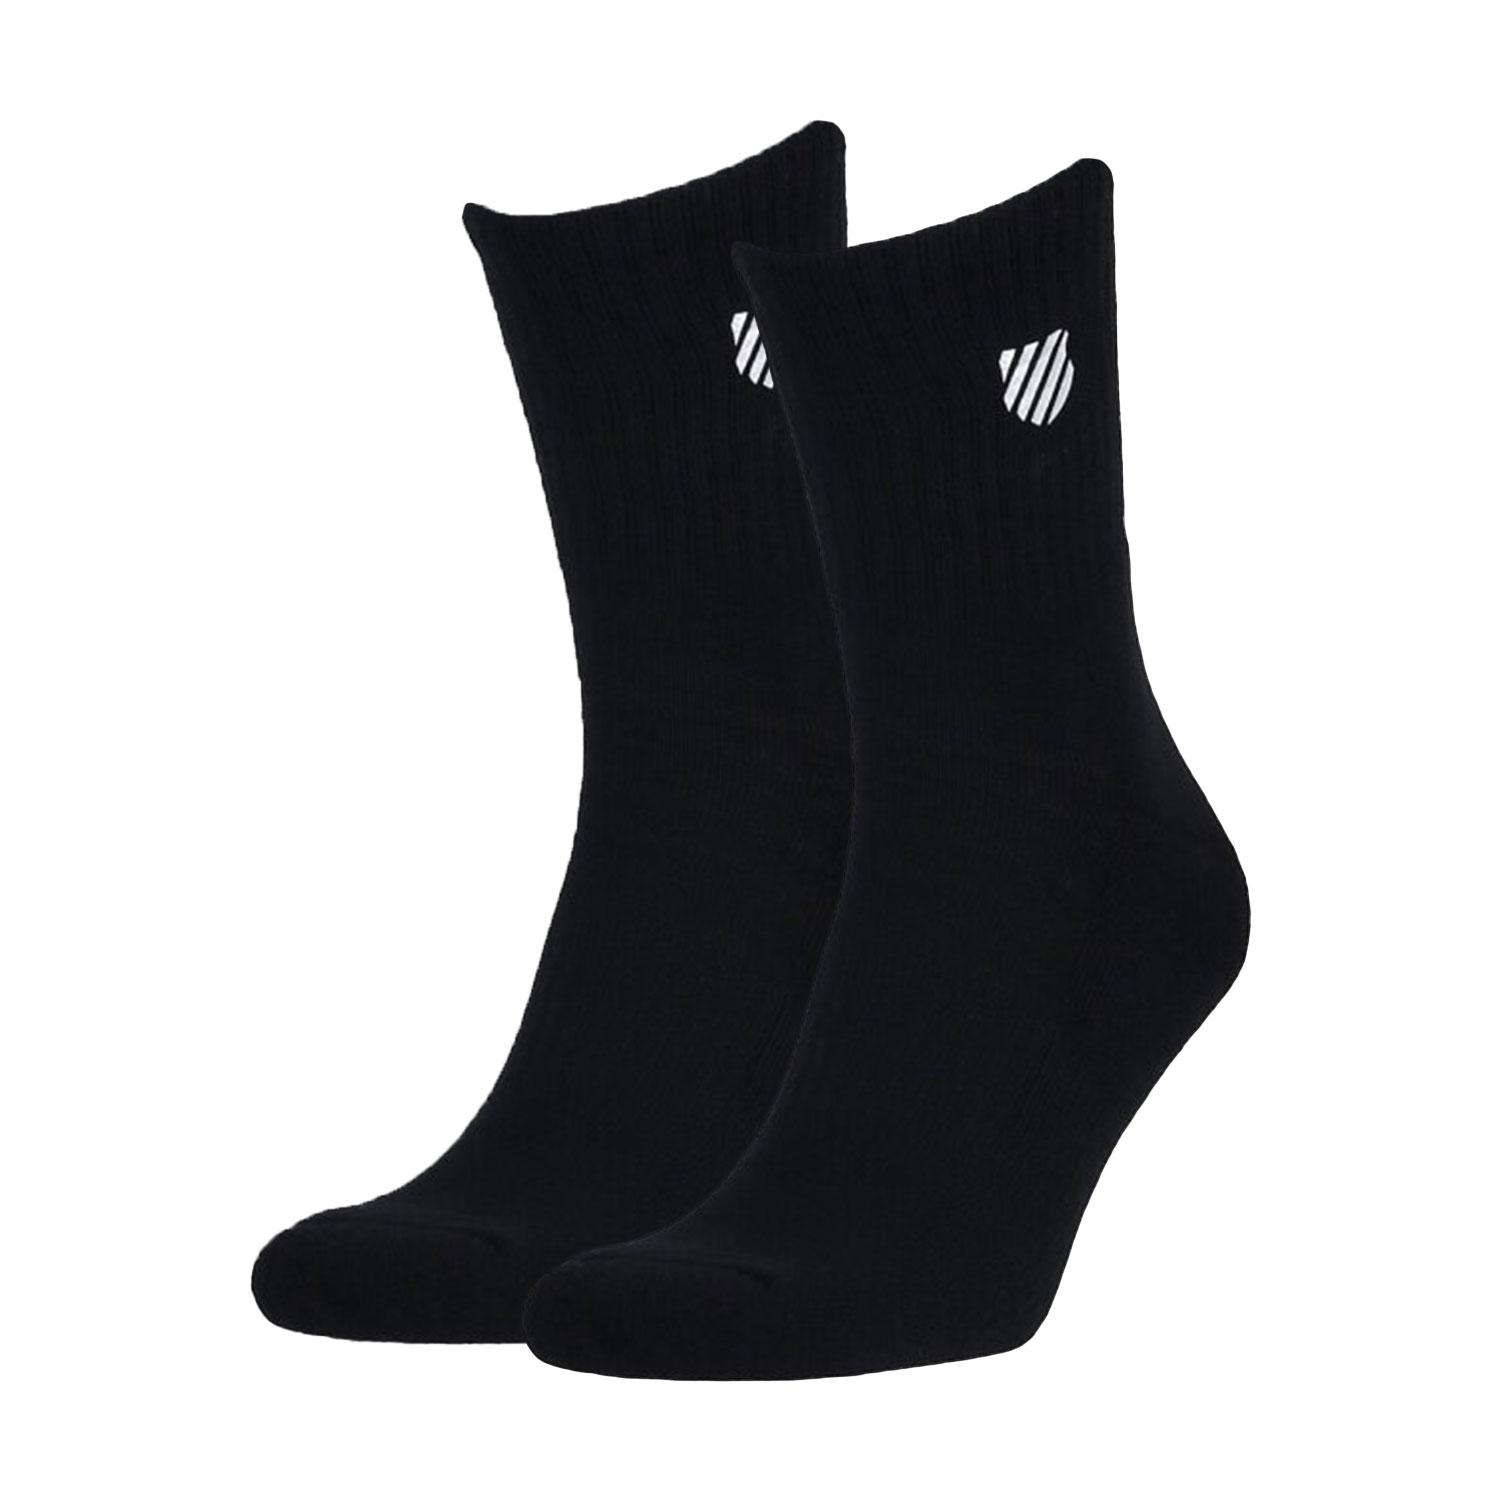 K-Swiss Hypercourt x 2 Socks - Black